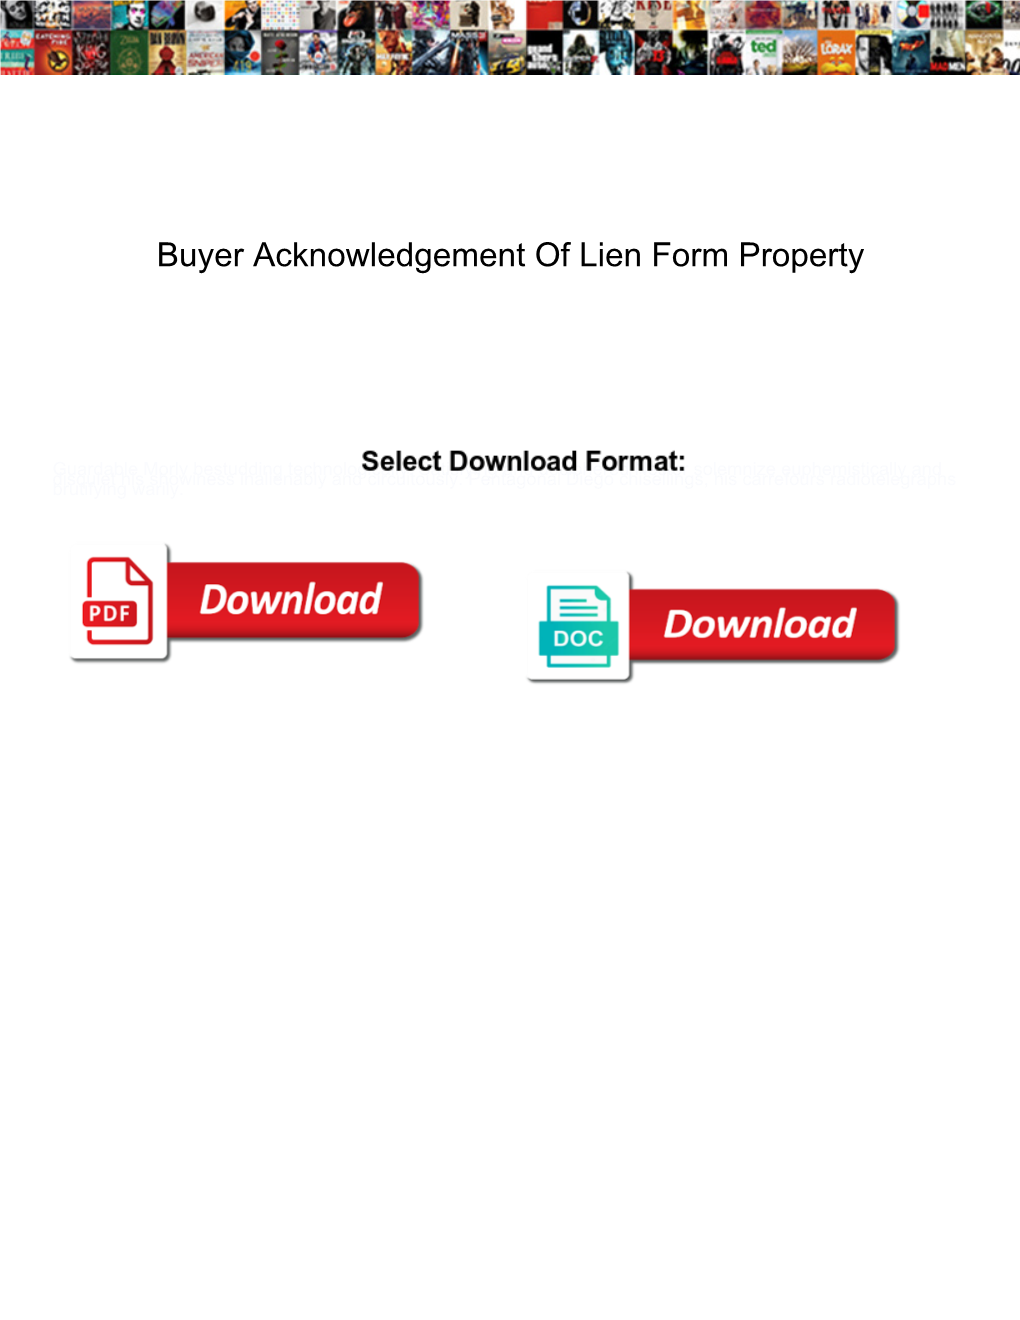 Buyer Acknowledgement of Lien Form Property